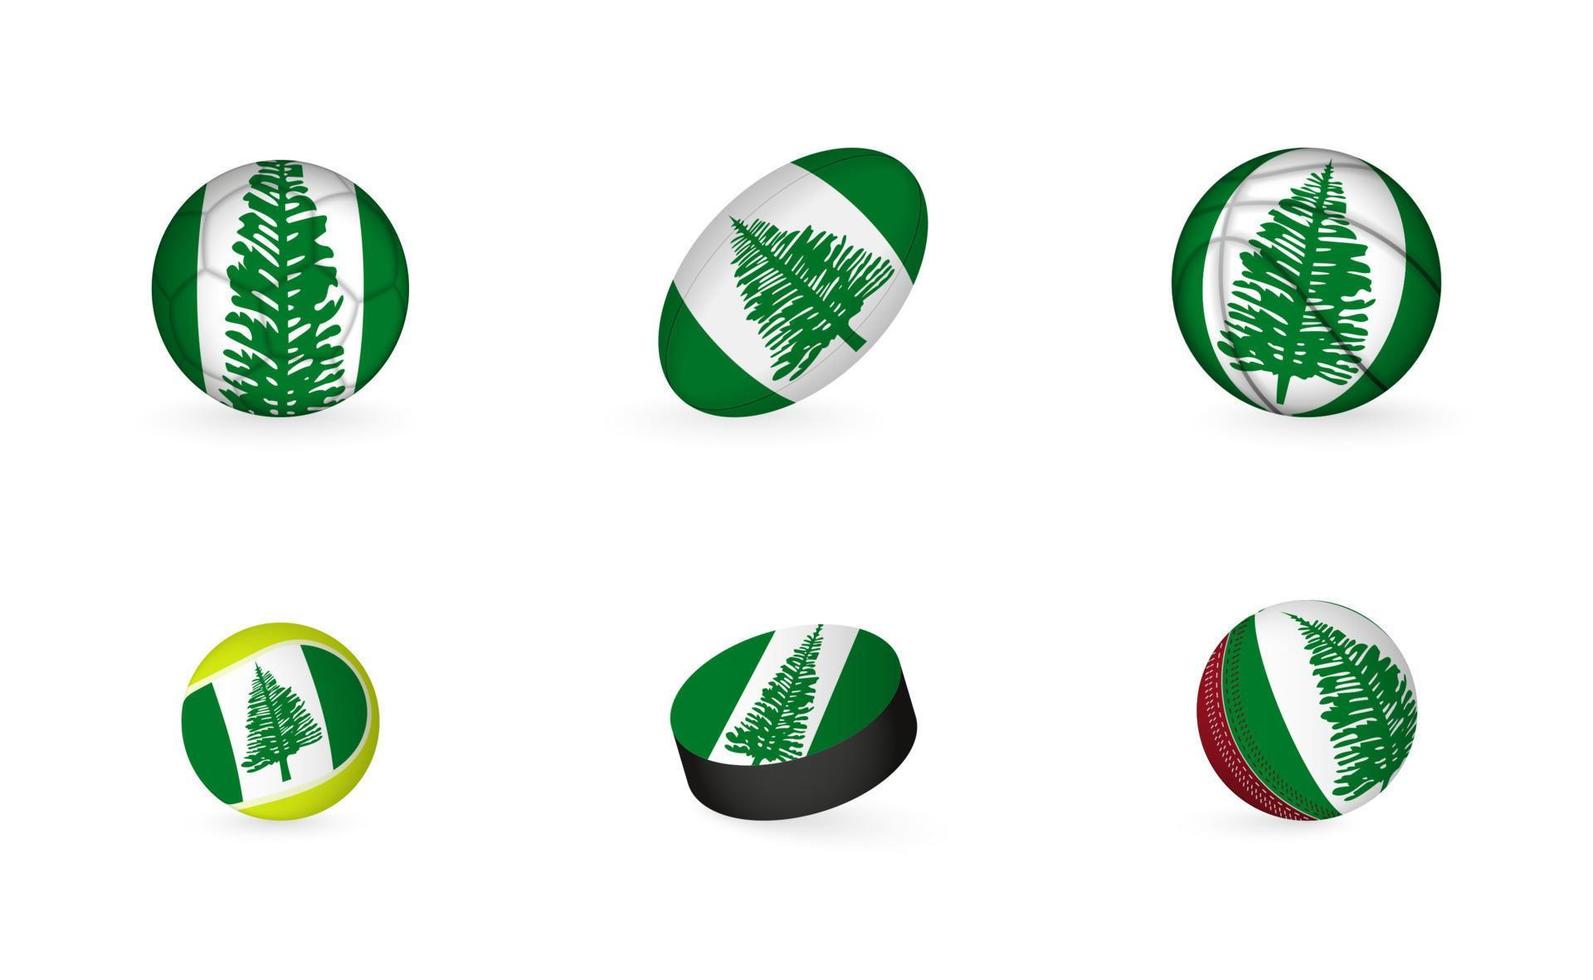 equipamentos esportivos com bandeira da ilha norfolk. conjunto de ícones de esportes. vetor